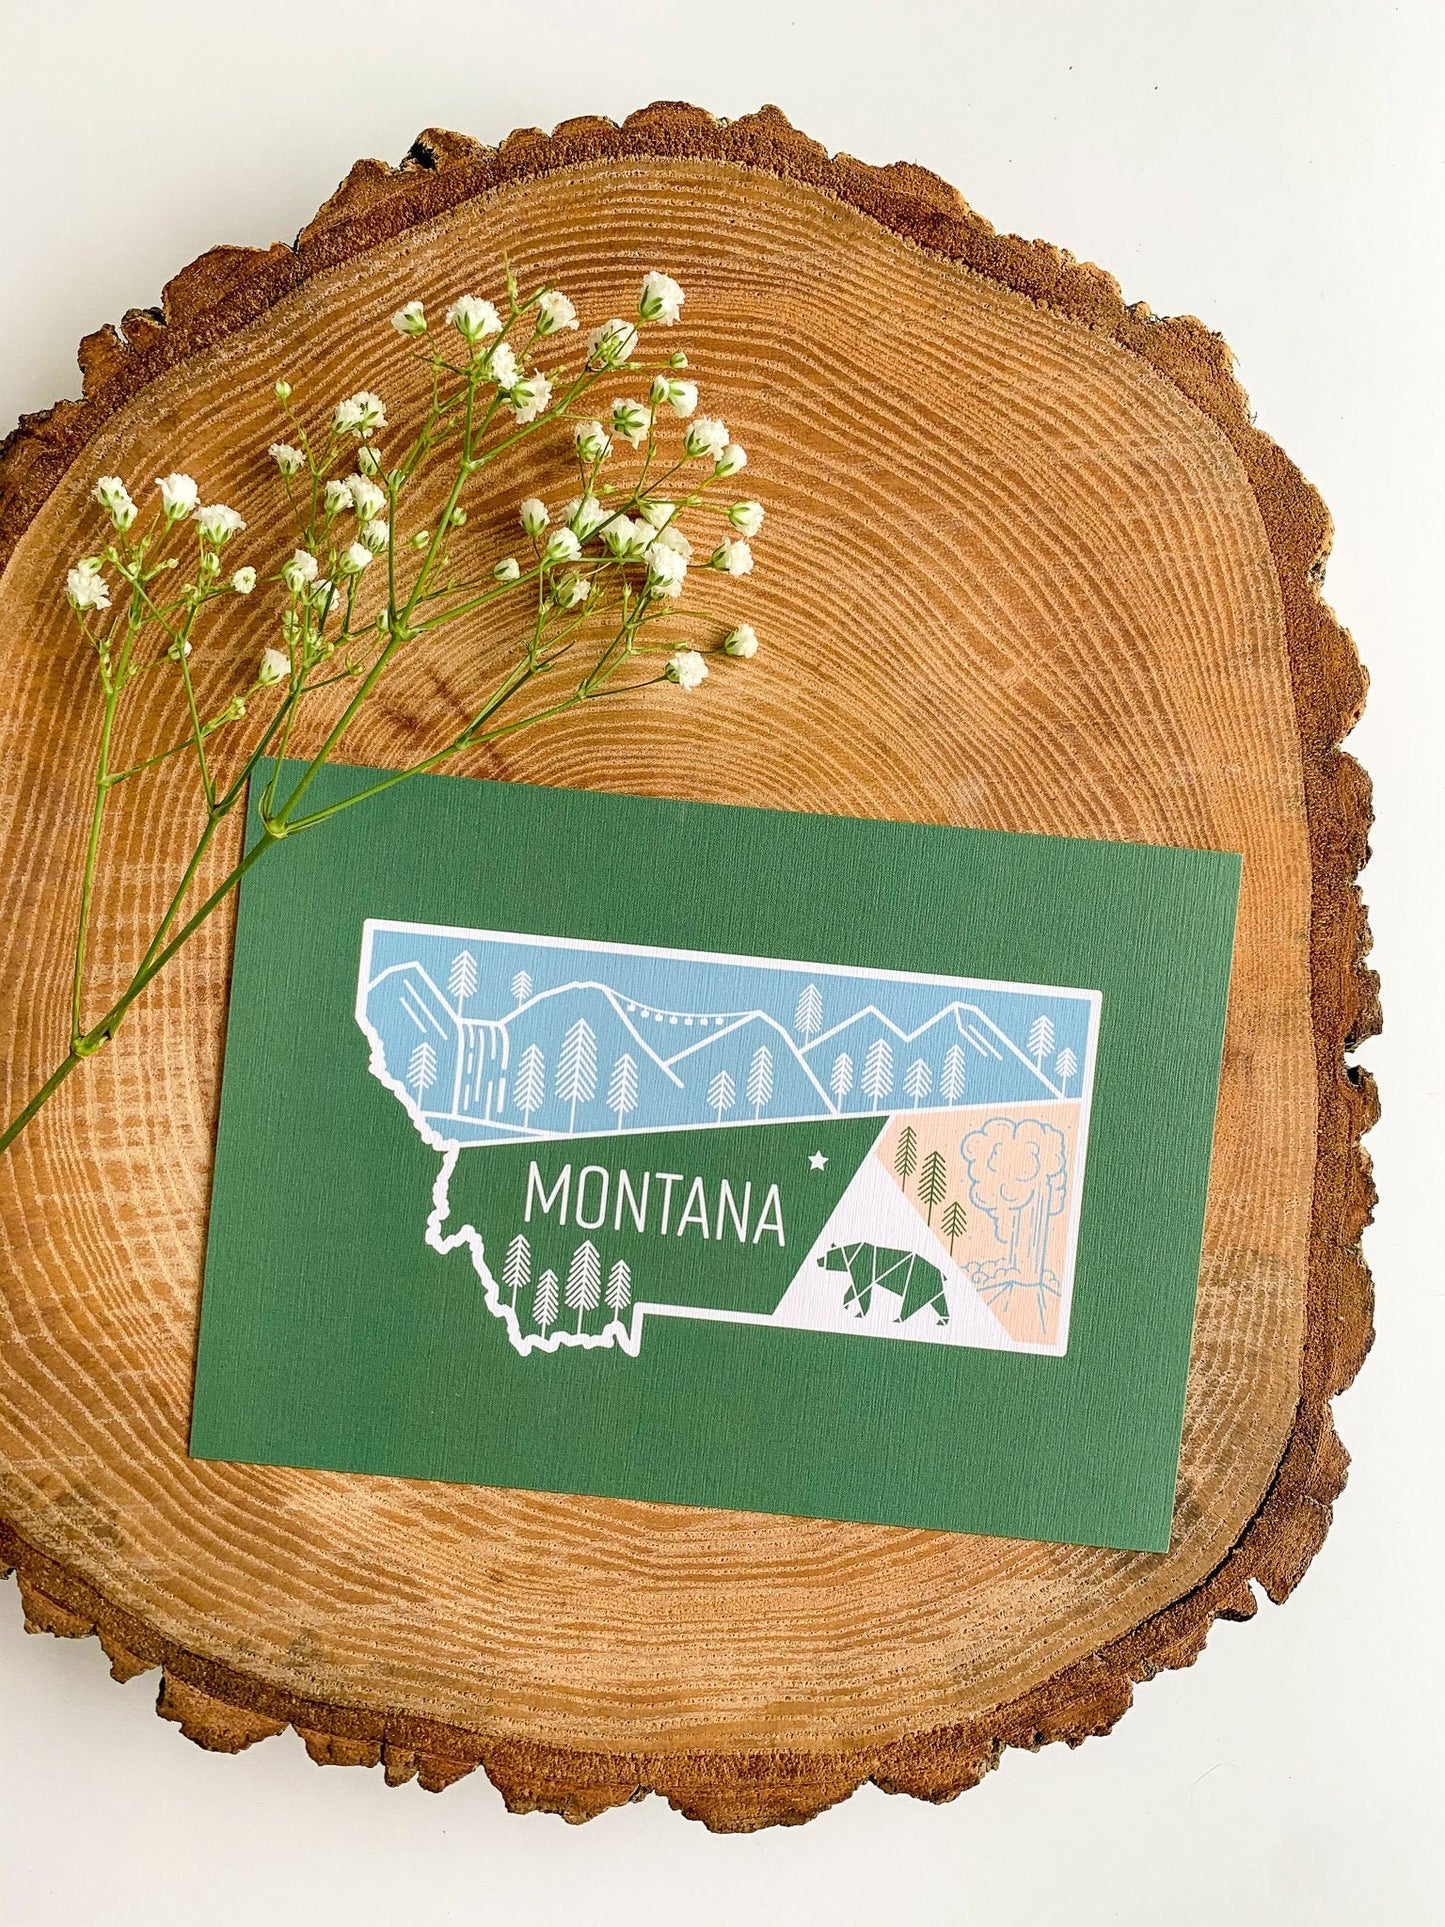 Montana State Postcard